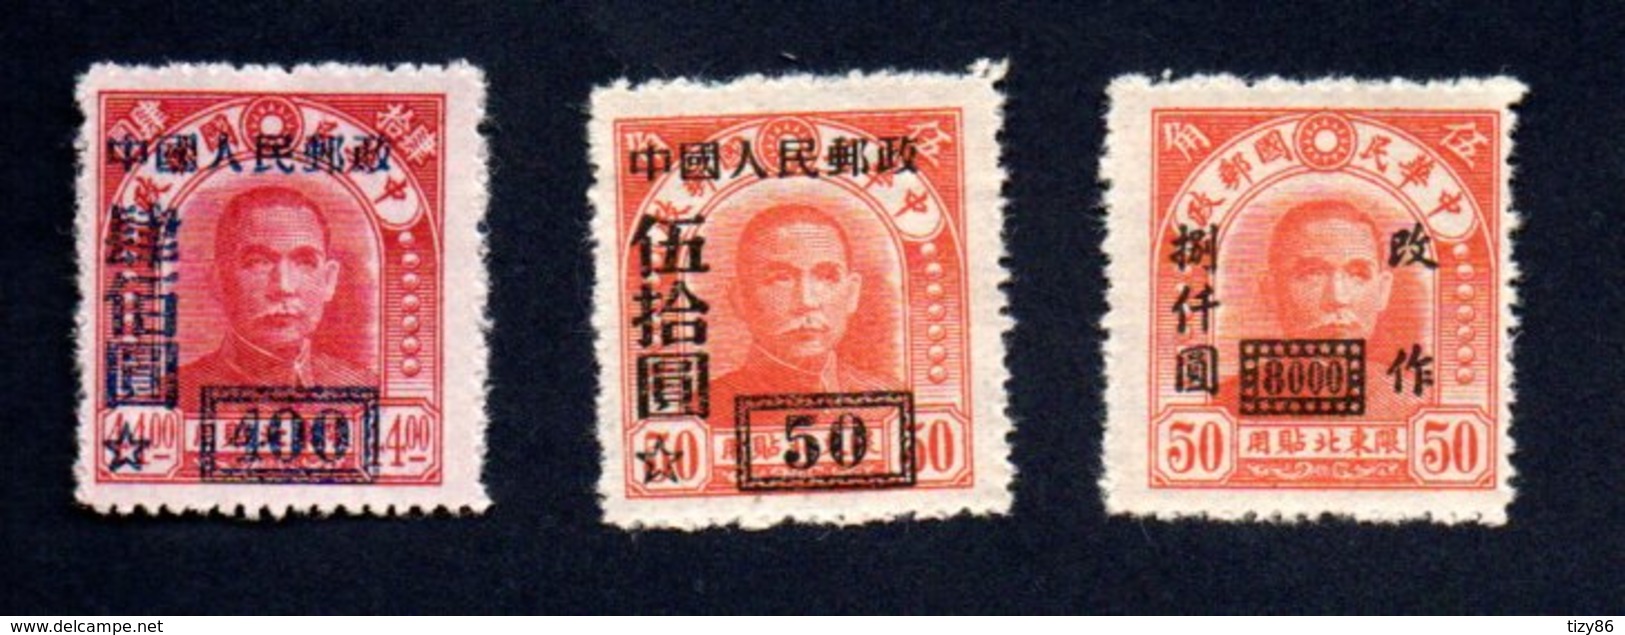 Francobolli Cina Anni '50 - 3 Valori - Nuovi